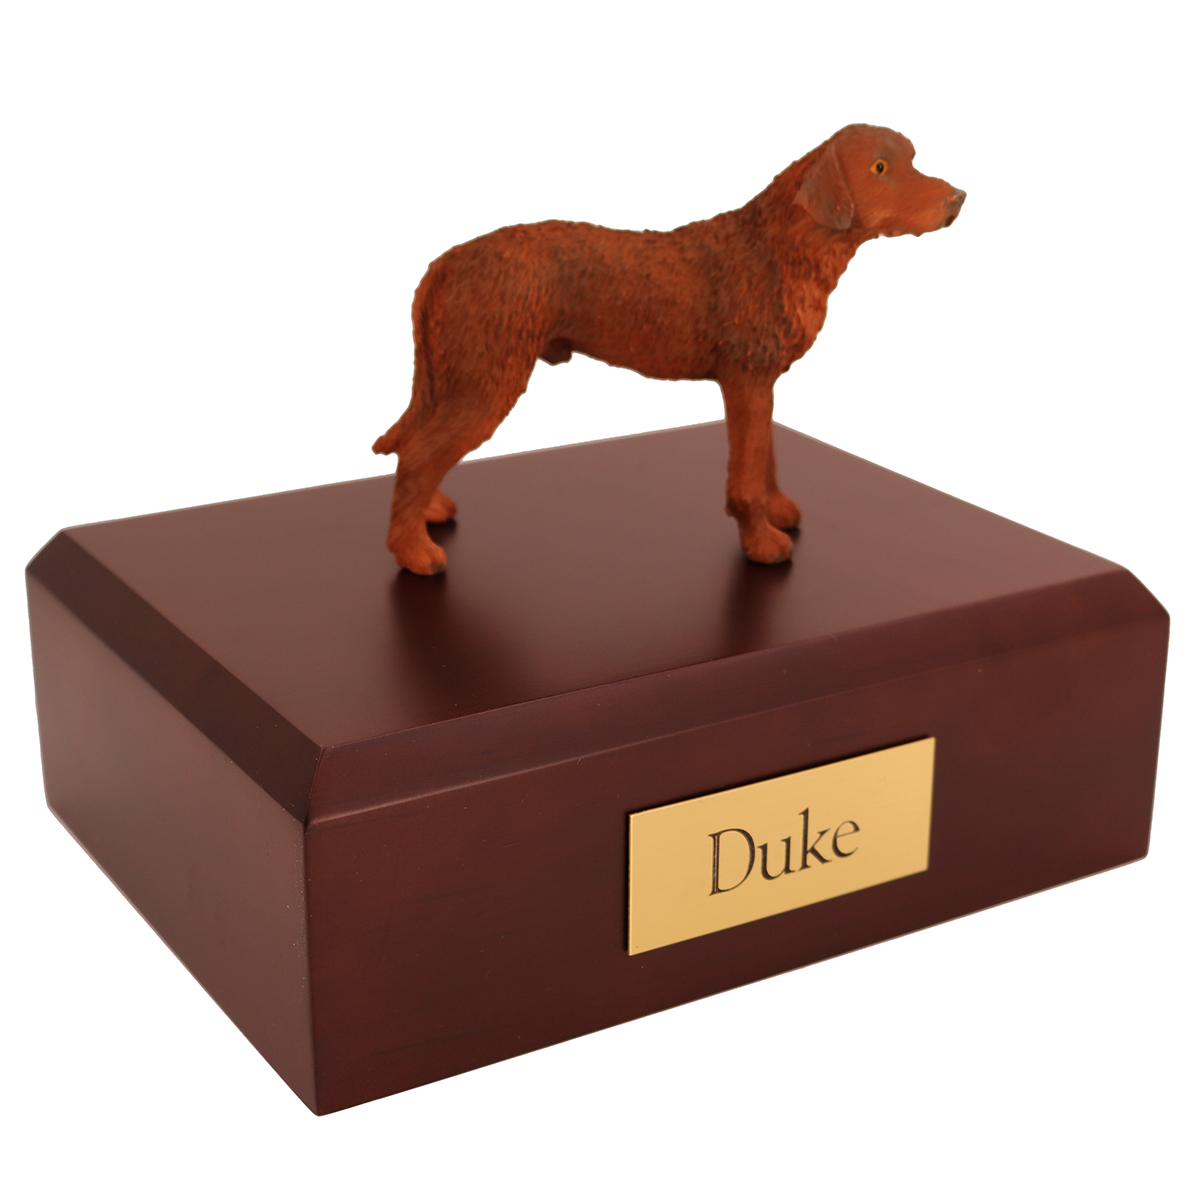 Dog, Chesapeake Bay Retriever - Figurine Urn